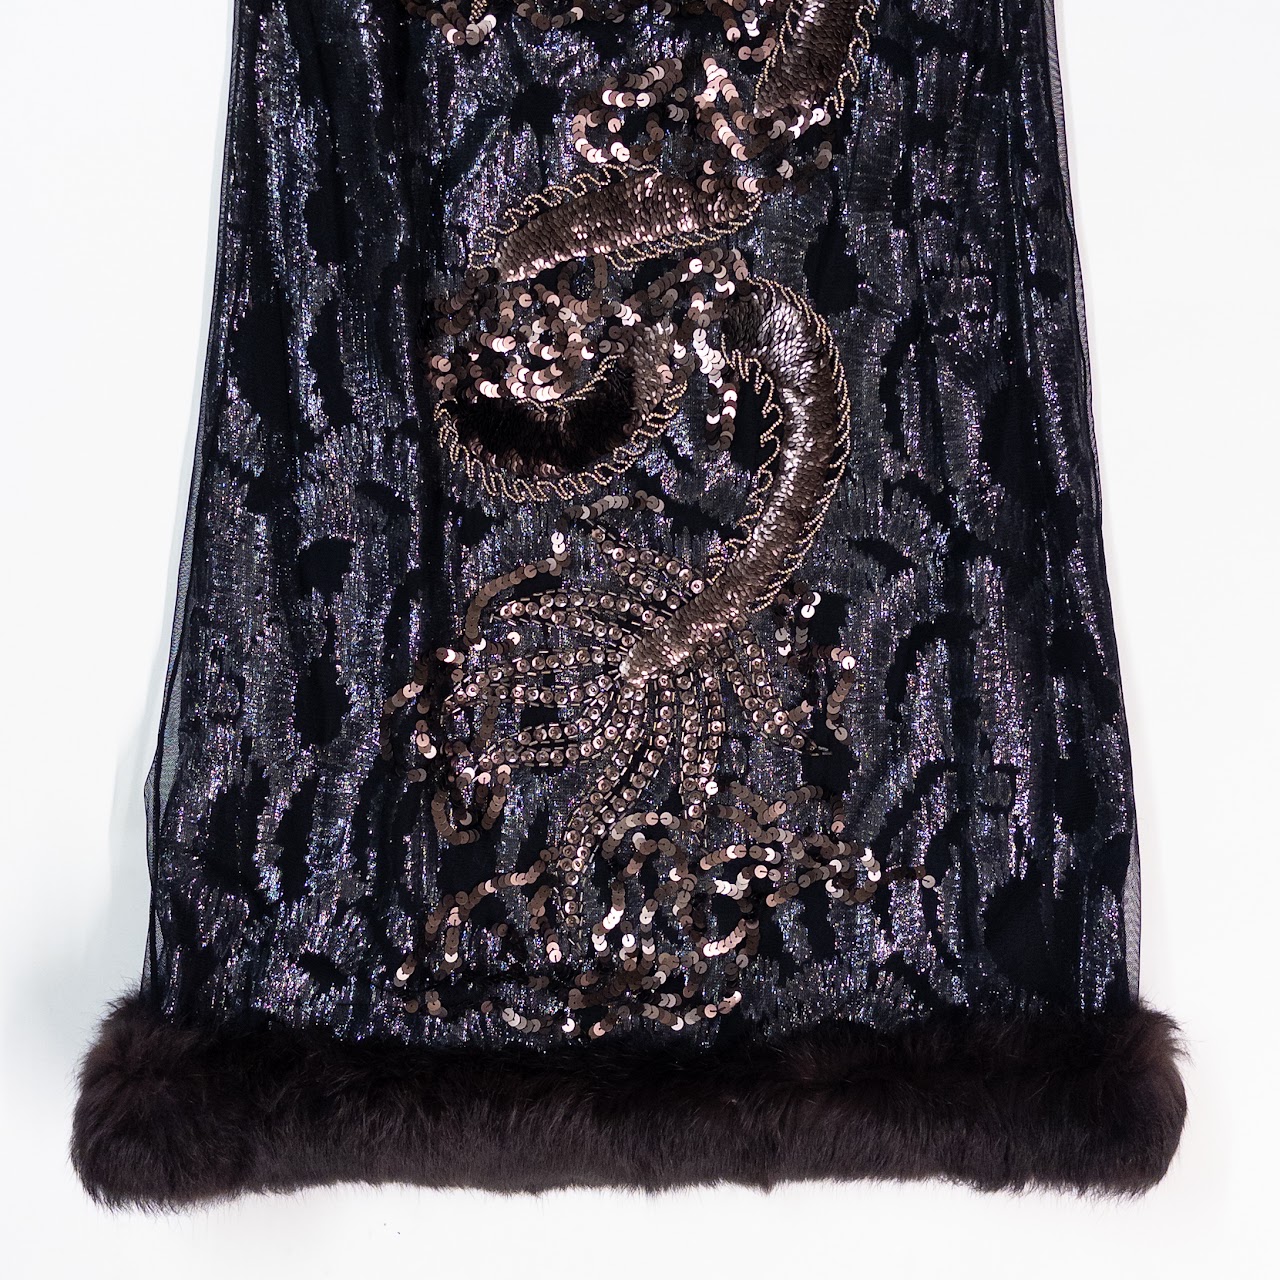 Vivienne Tam Dragon Motif Sequined Dress